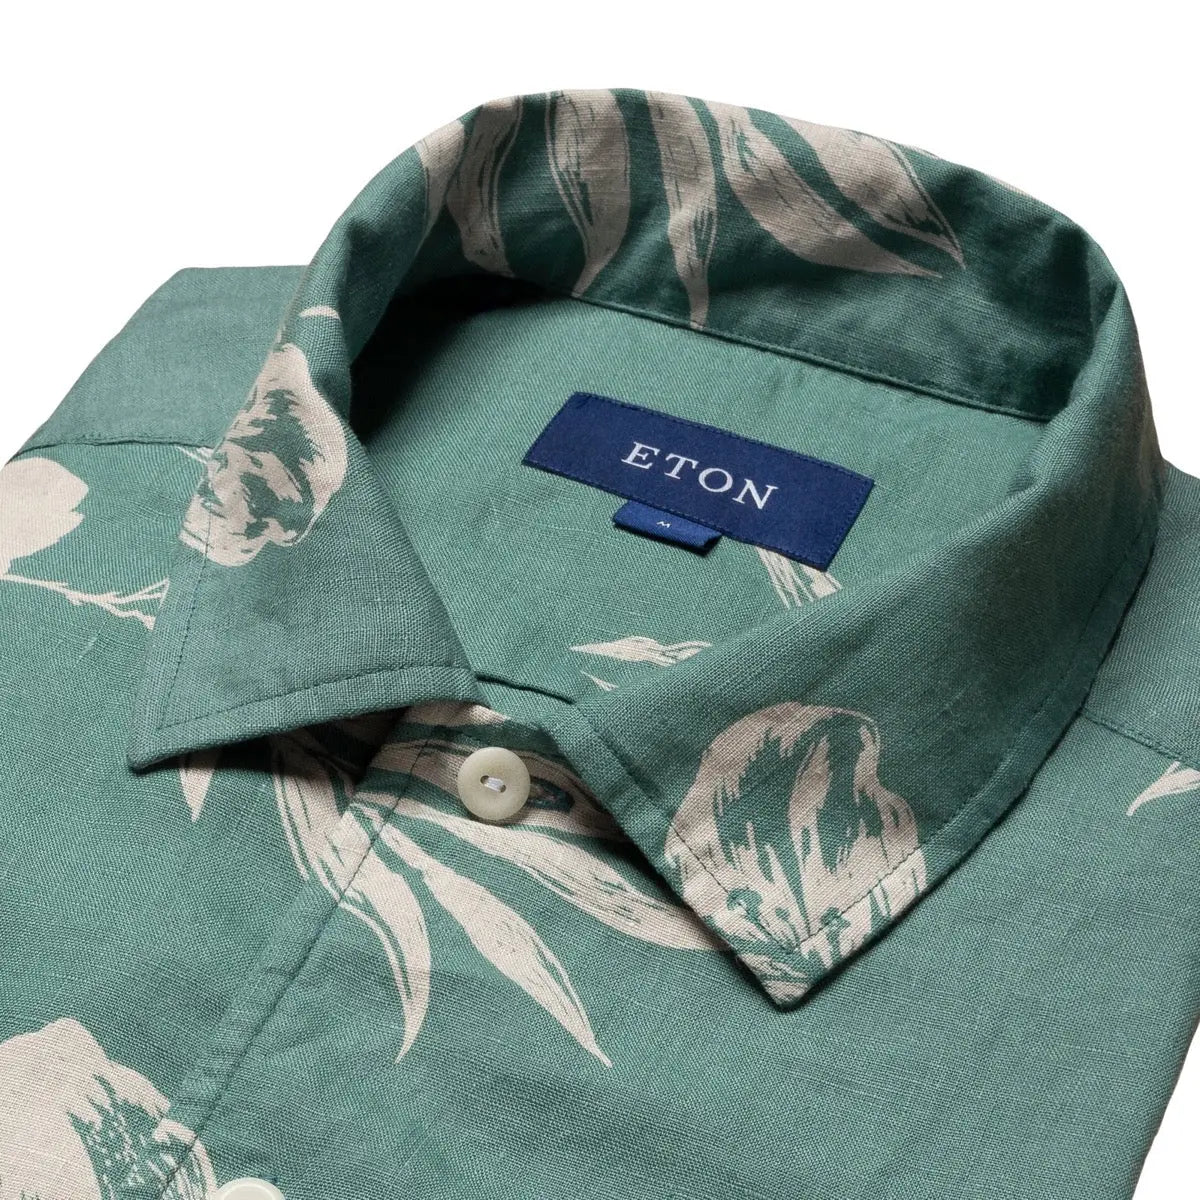 Green Hibiscus Print Linen Resort Short Sleeve Shirt  Eton   